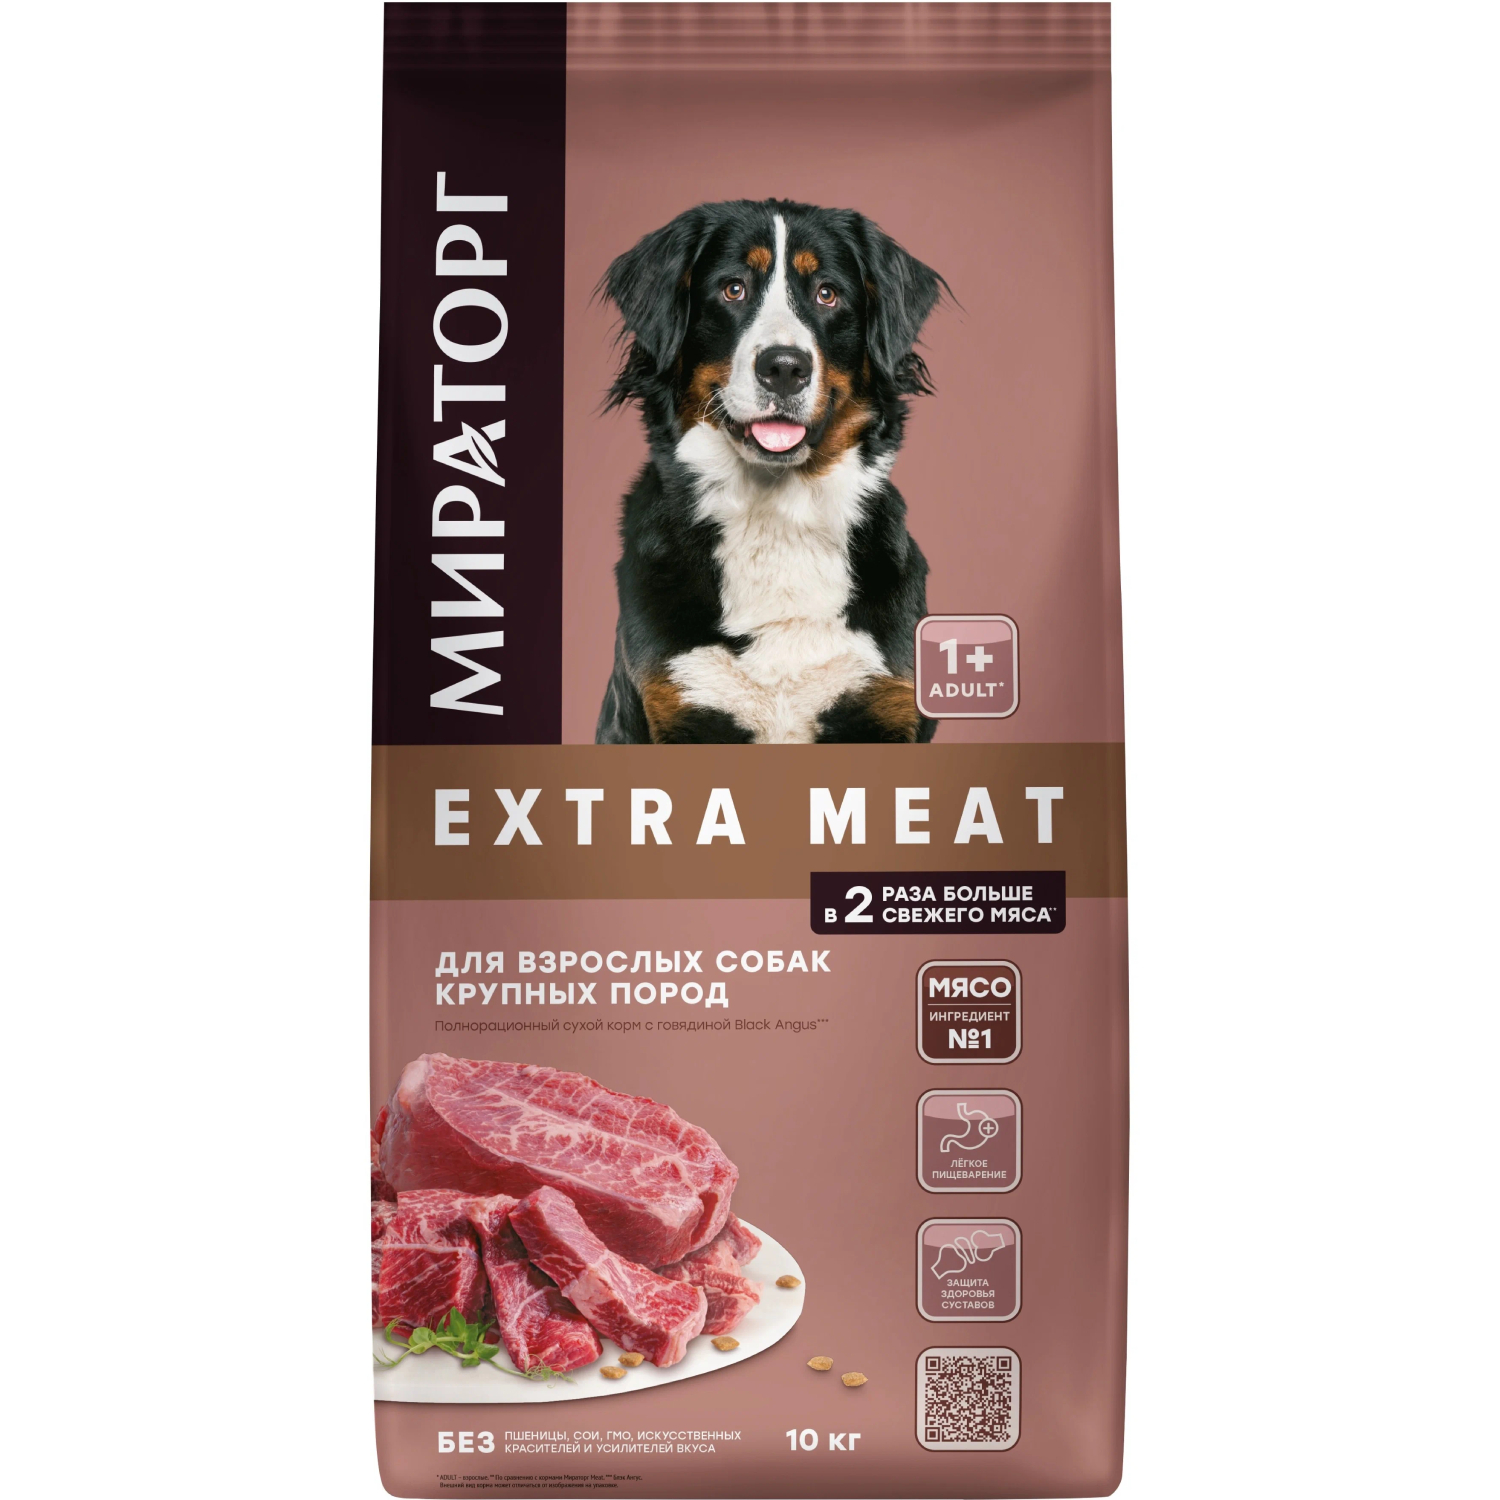 Корм для собак Winner Extra Meat для крупных пород, говядина Black Angus 10 кг, размер 31*36*43 см